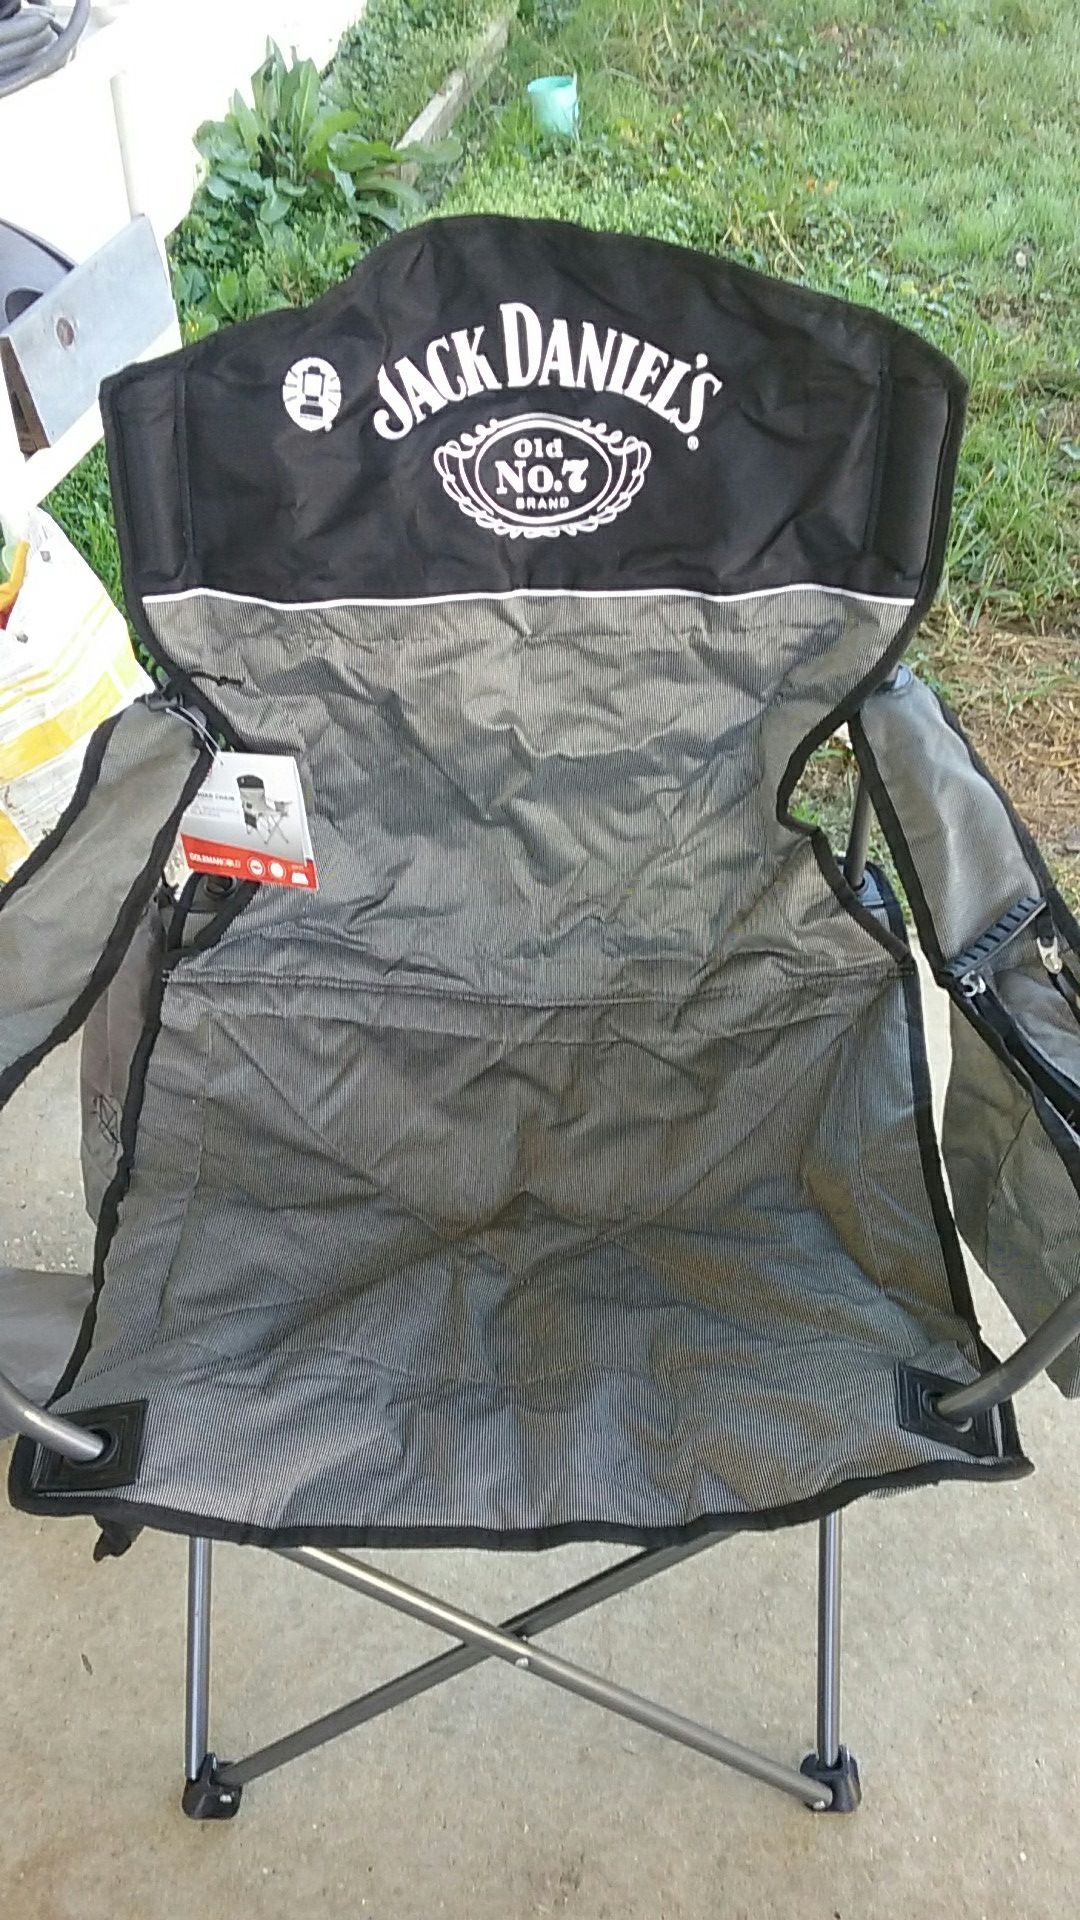 Coleman/ Jack Daniel's cooler chair